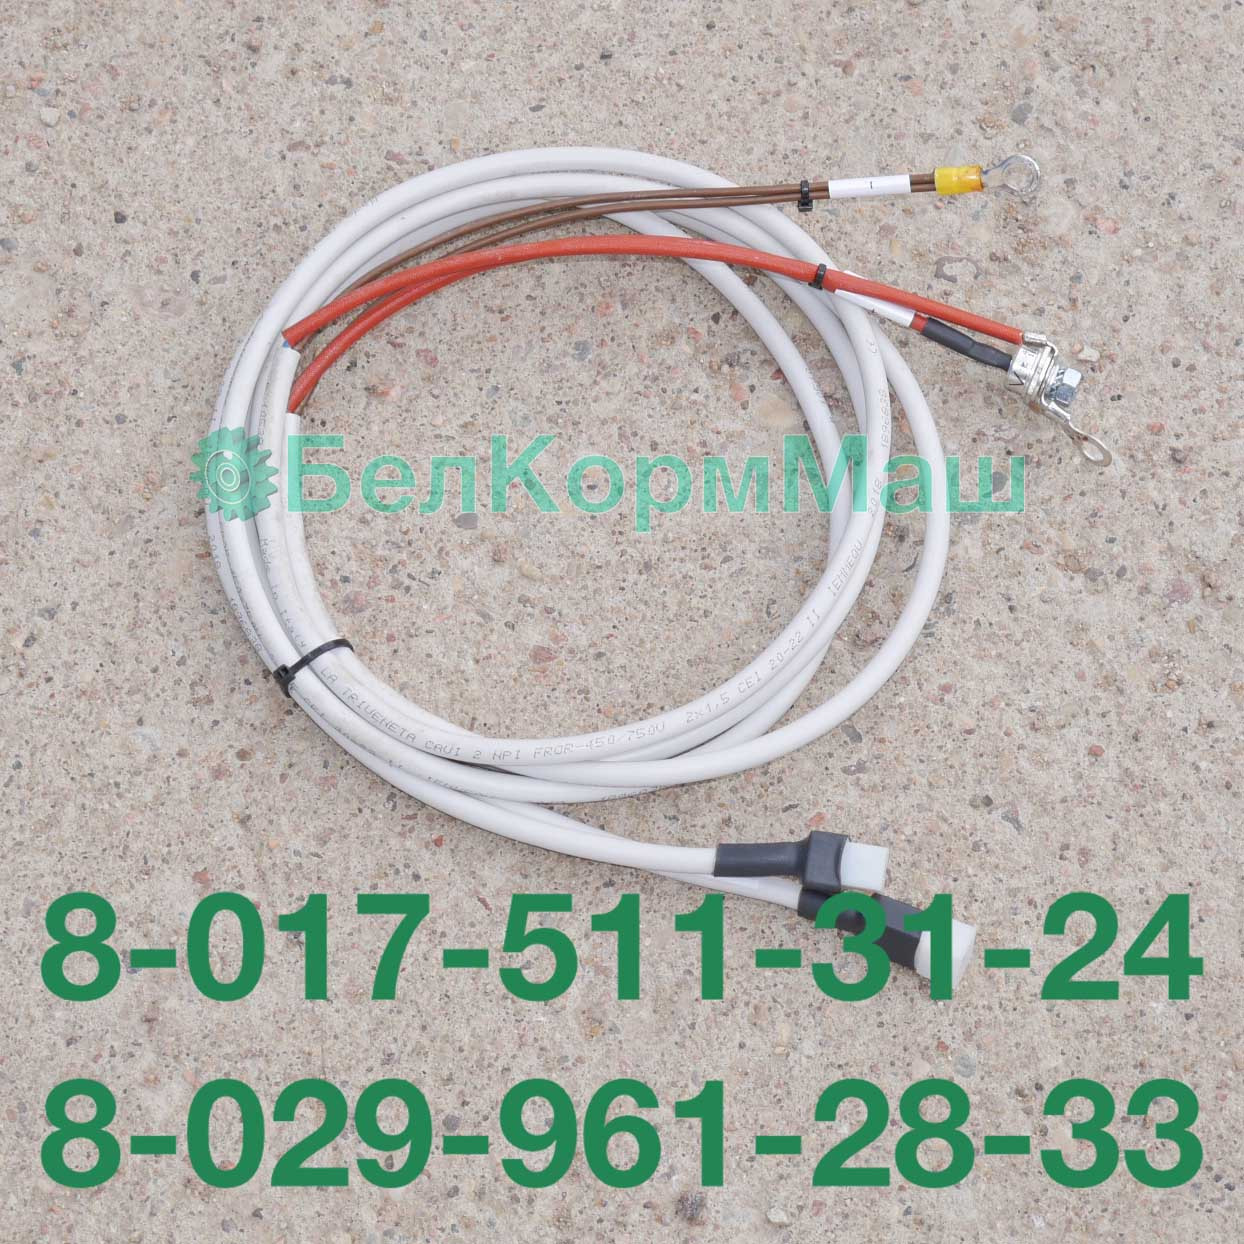 Аккумуляторный кабель 989-0200 с двумя креплениями  к кормораздатчику ИСРК-12 "Хозяин"